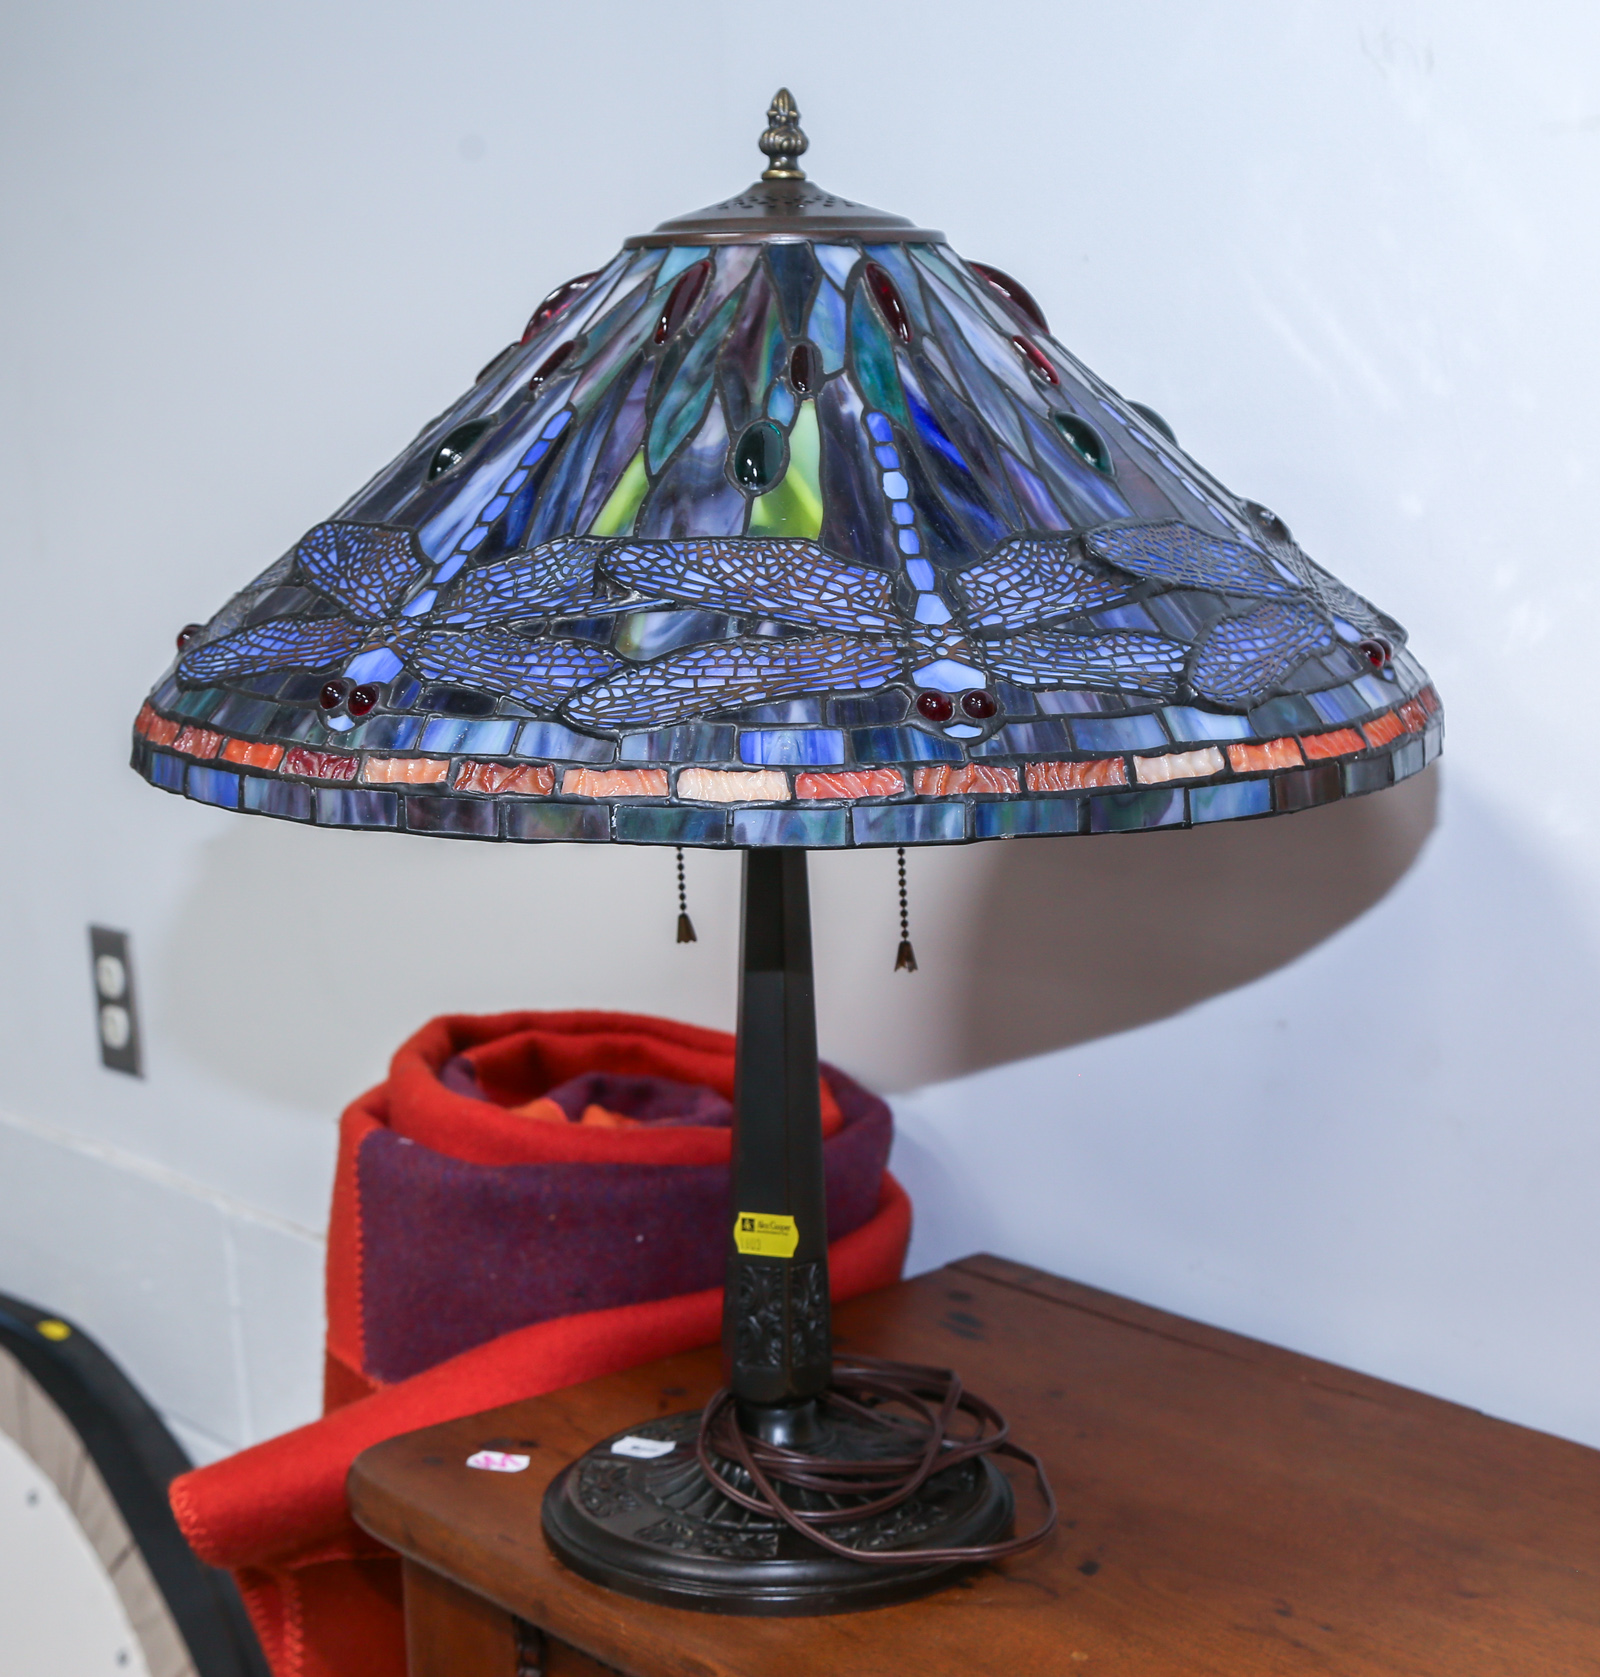 ART NOUVEAU STYLE TABLE LAMP Comprising 3cb9ee